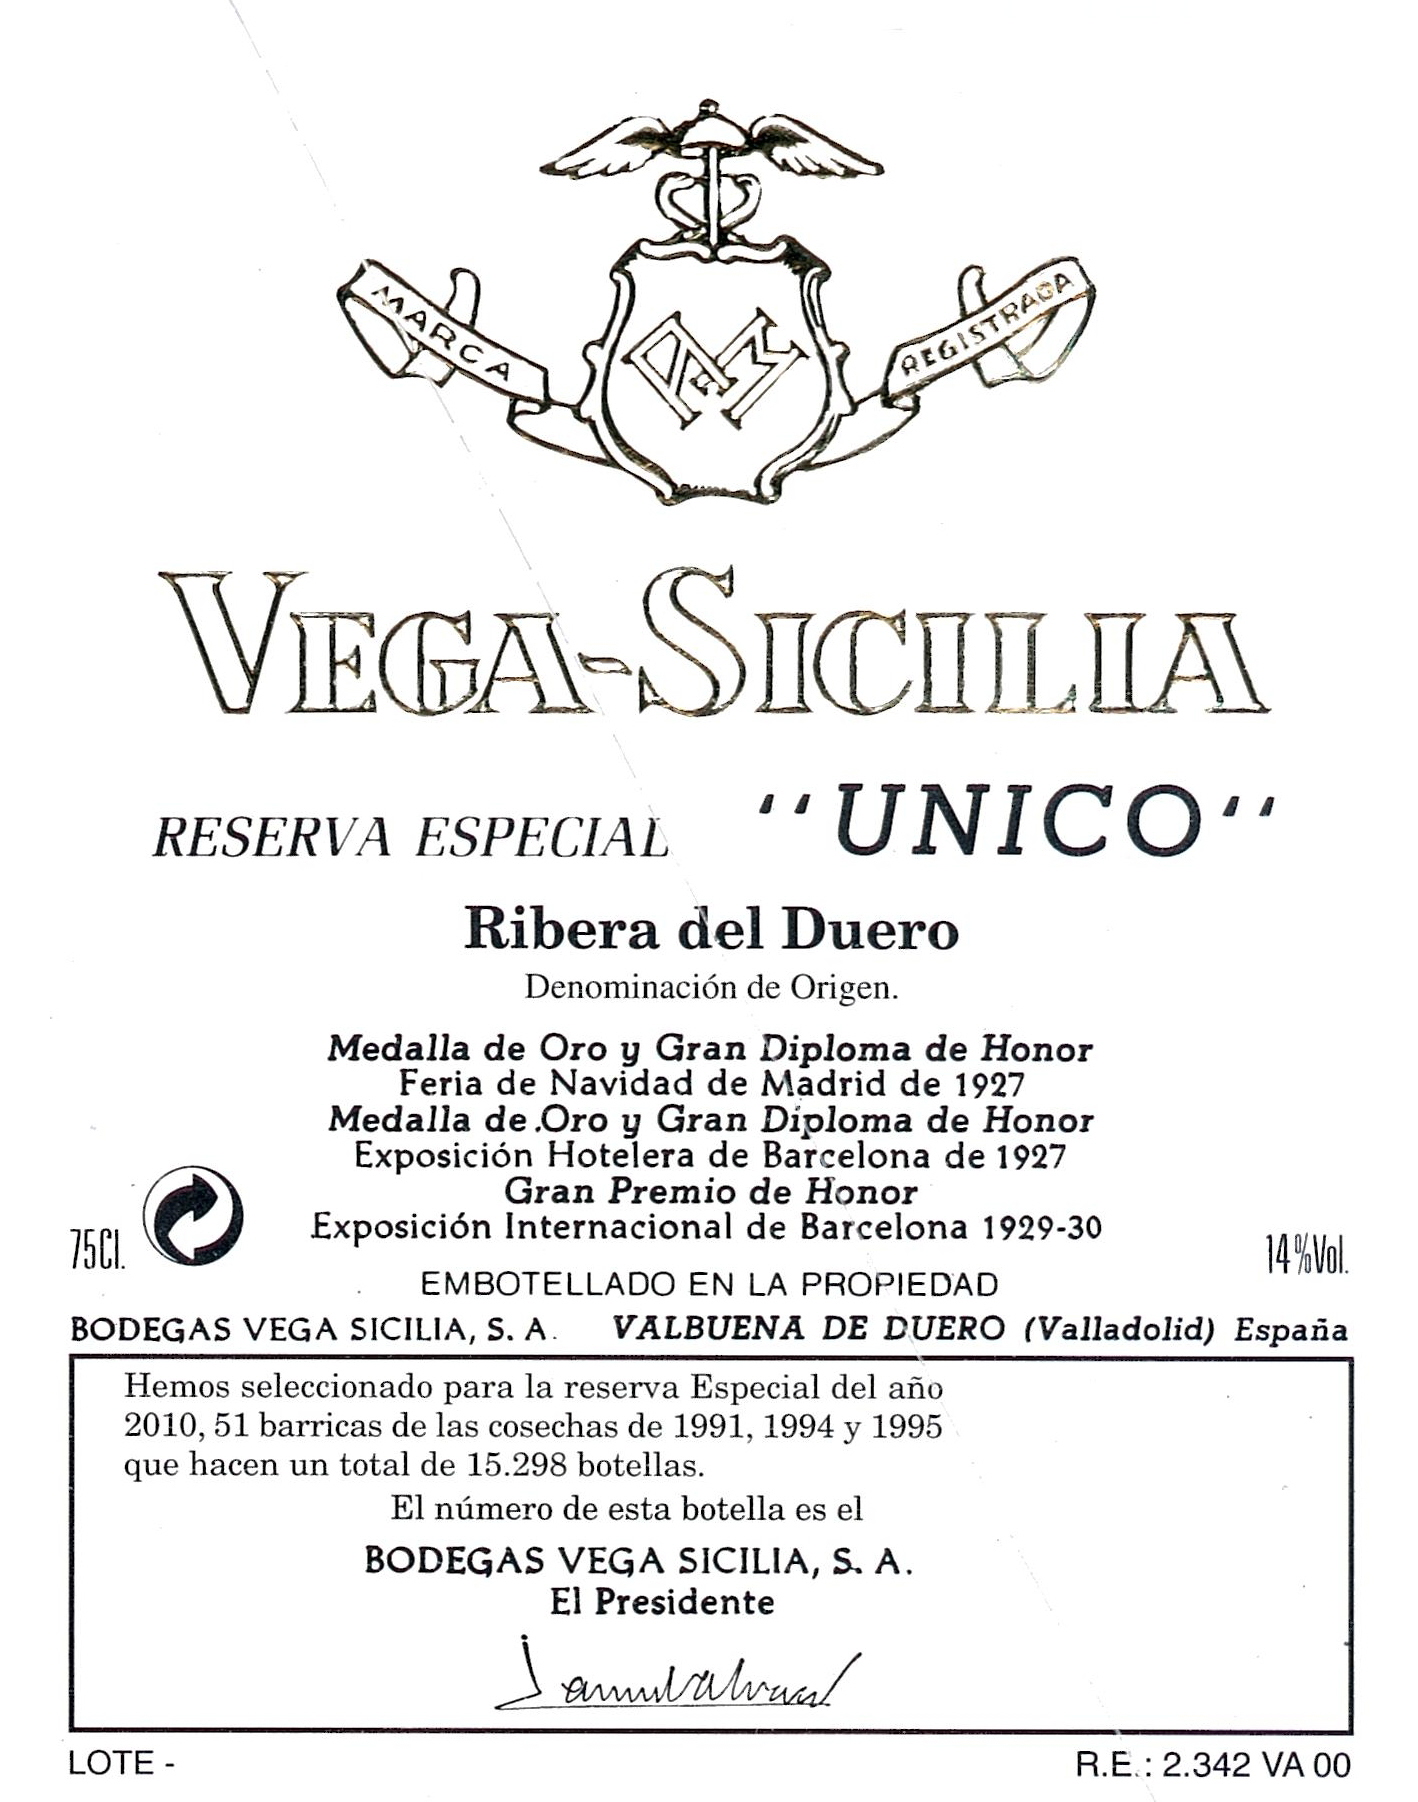 1972 Vega Sicilia Unico Ribera Del Duero Spain image